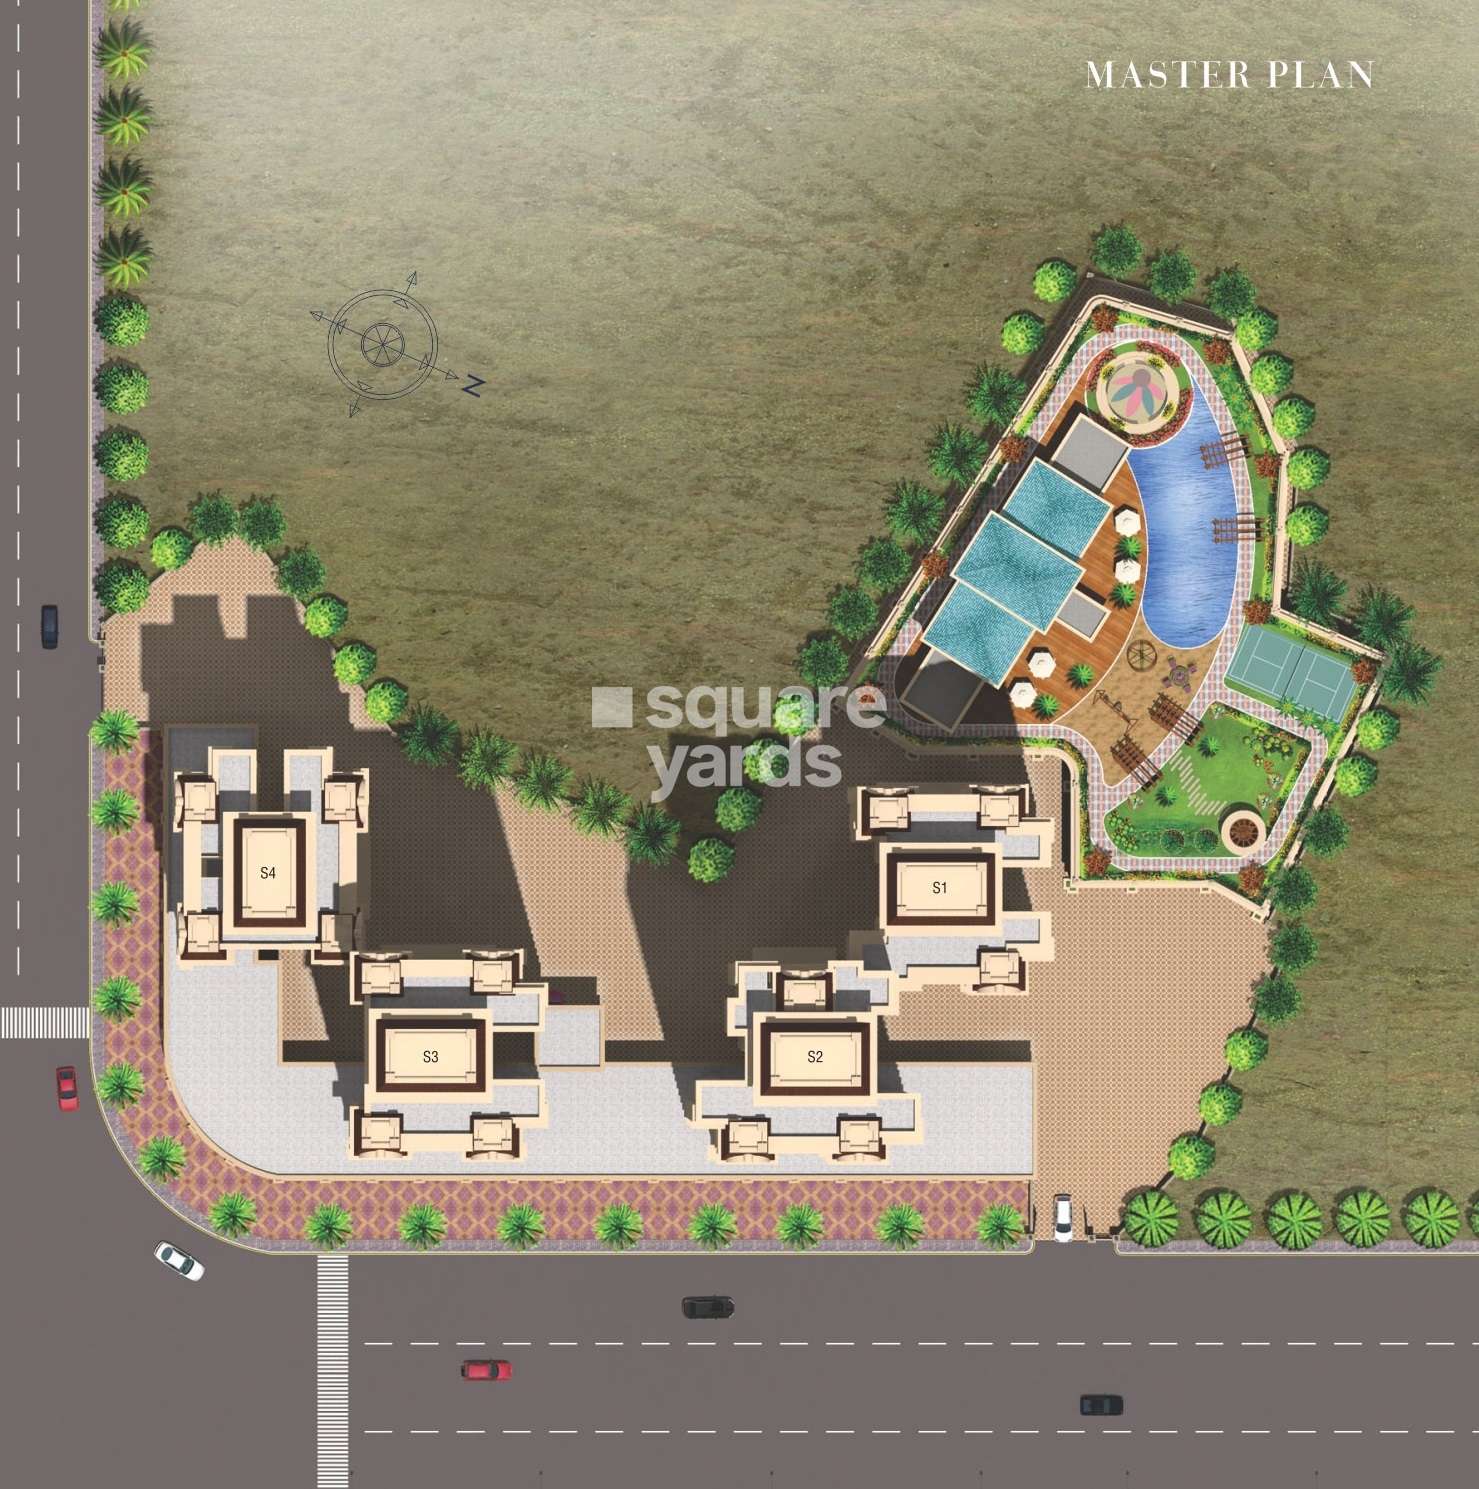 balaji trinity oasis project master plan image1 8273